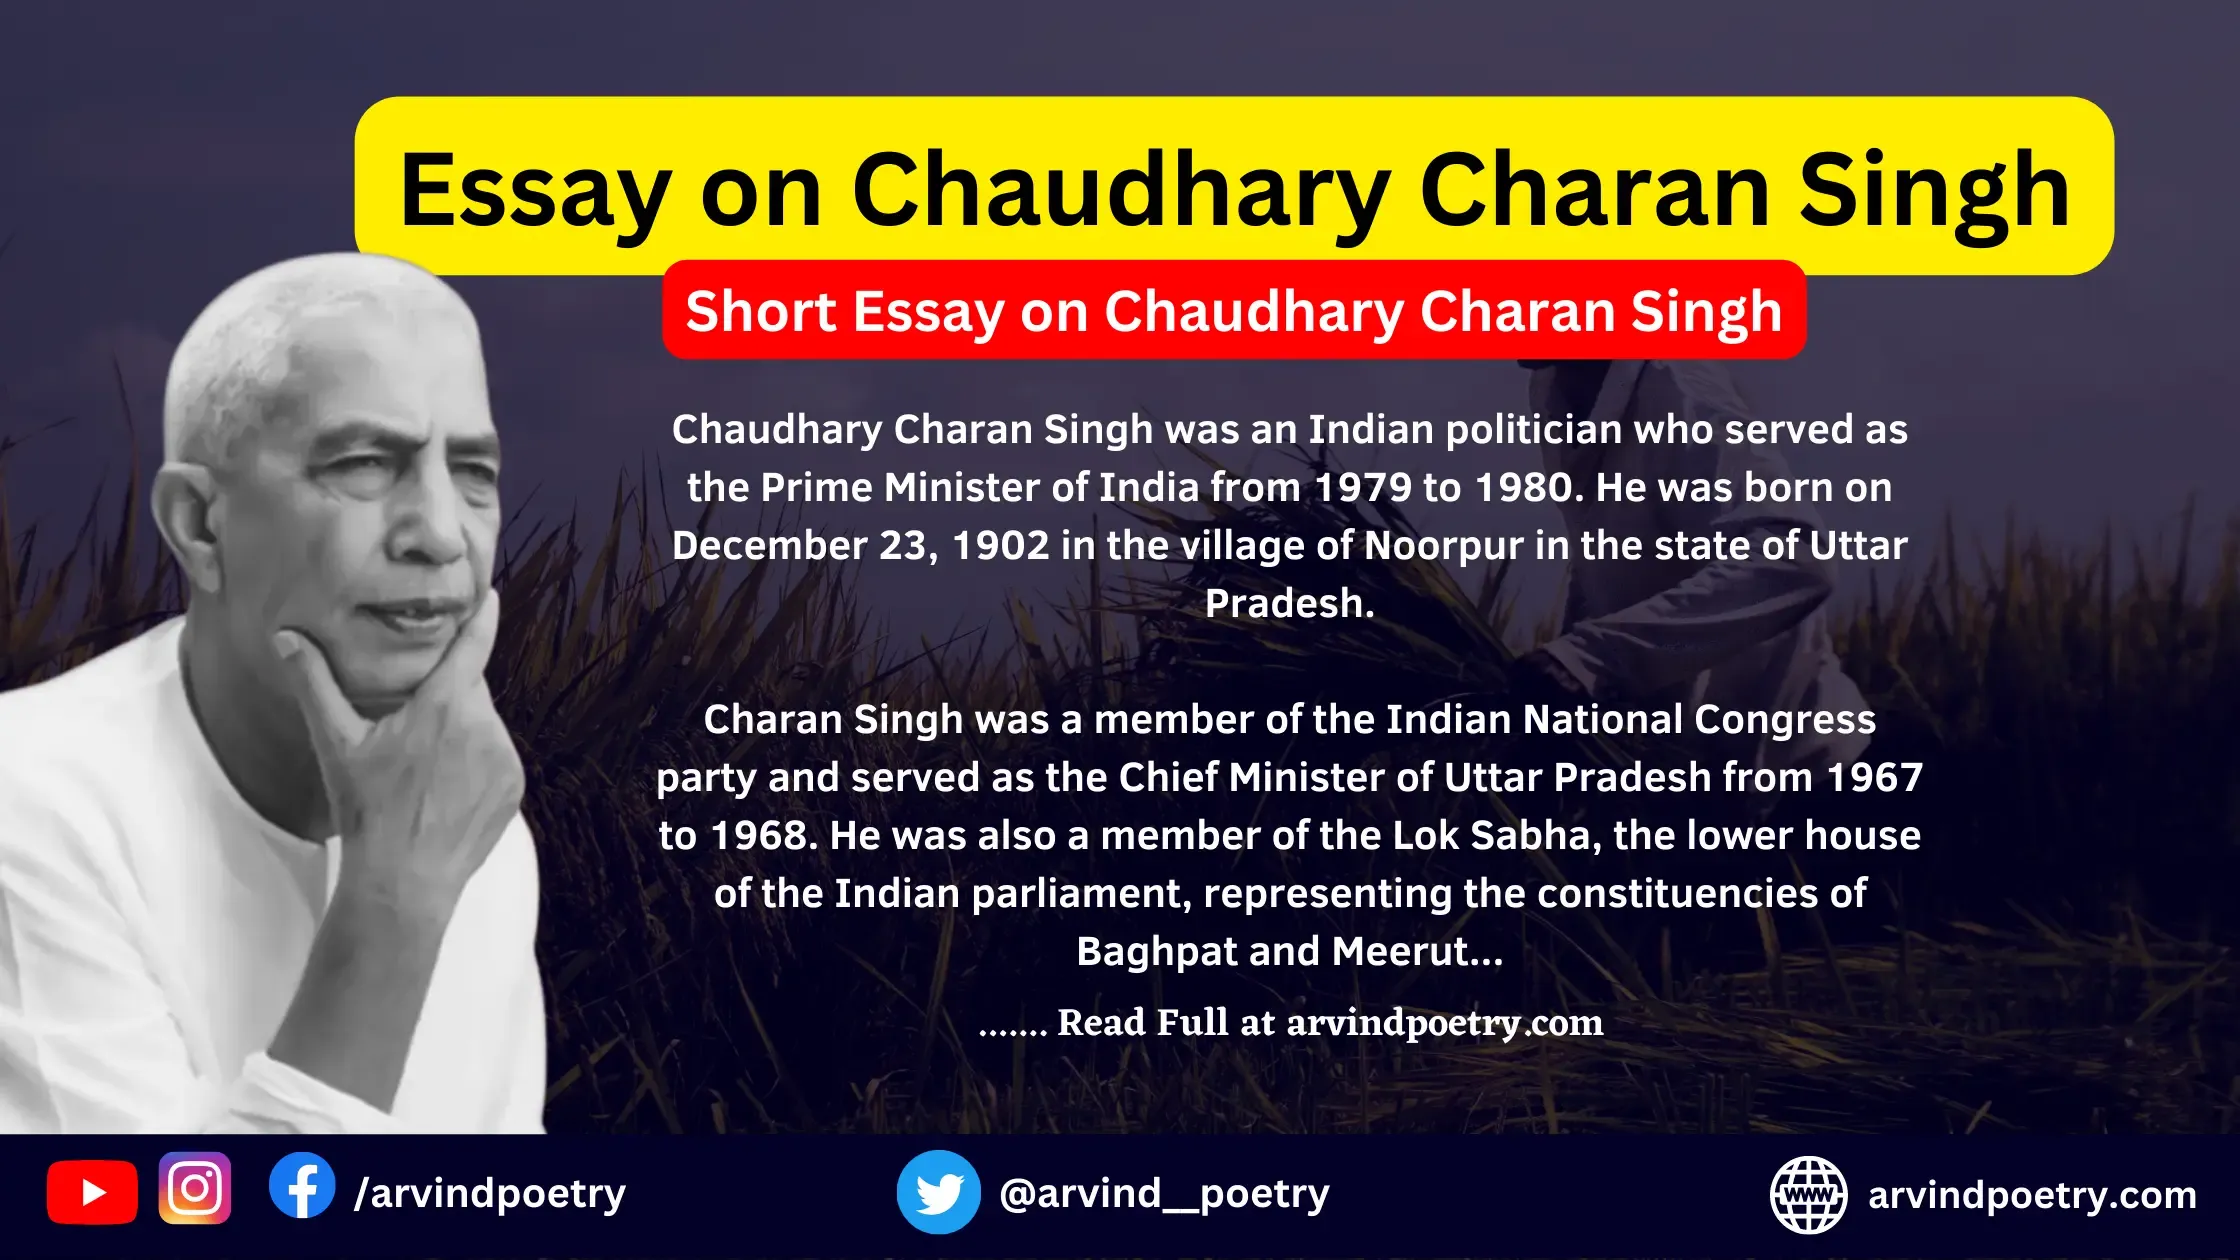 Essay on Chaudhary Charan Singh